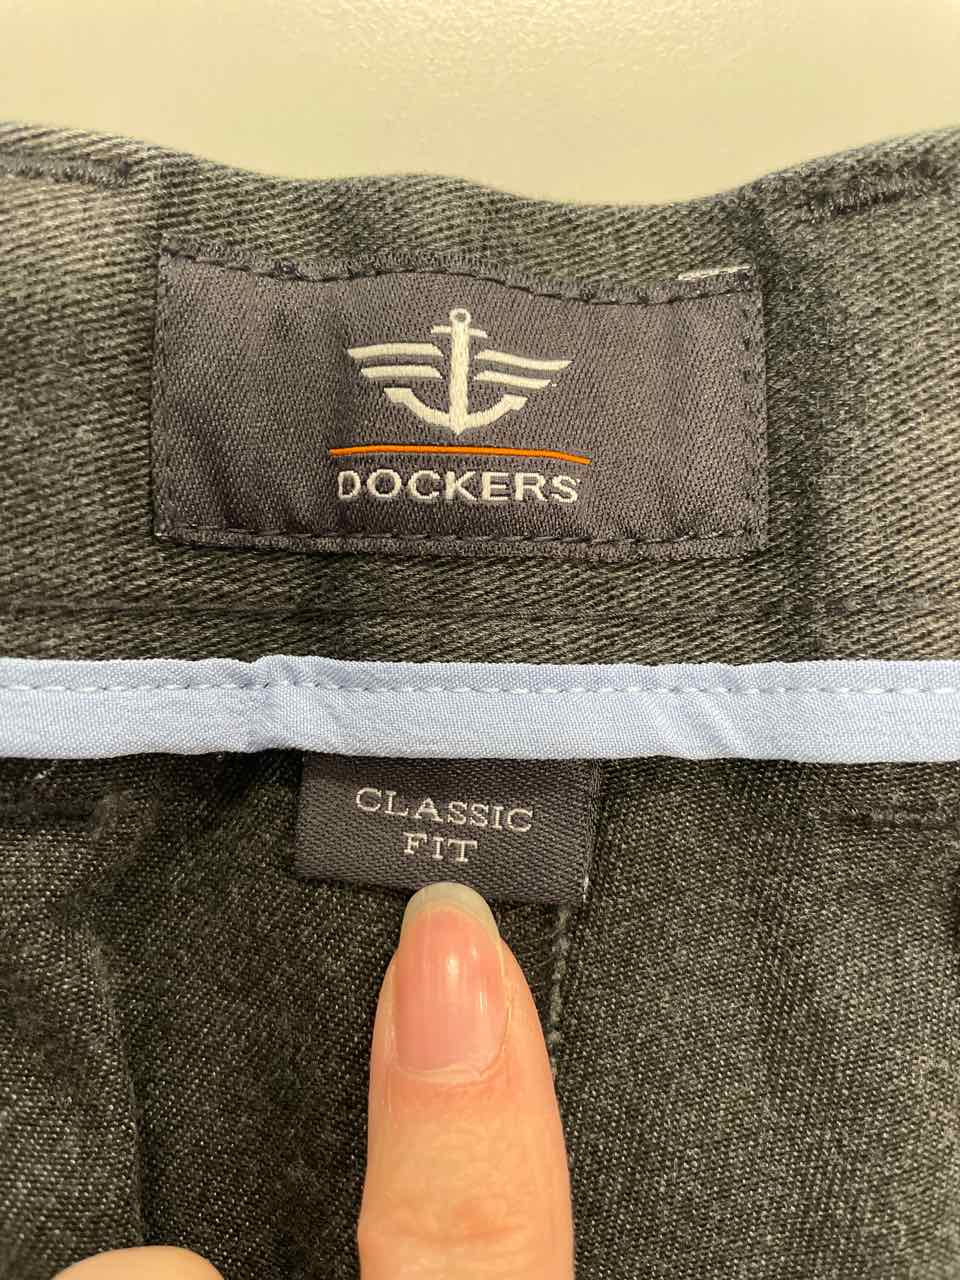 34/32 - Dockers Slacks